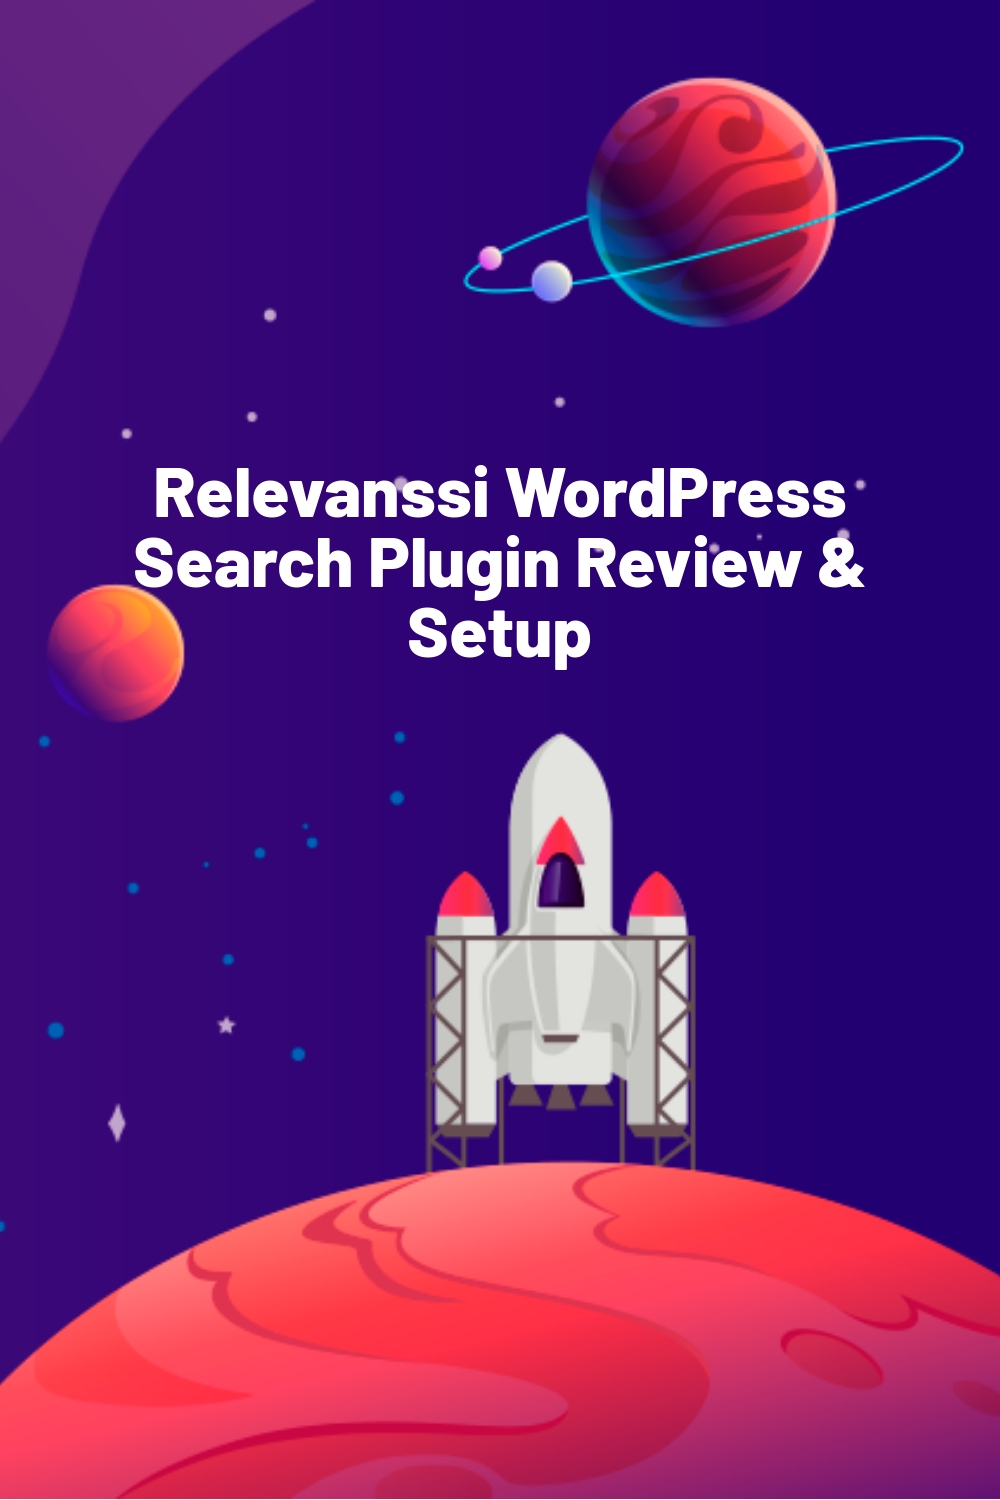 Relevanssi WordPress Search Plugin Review & Setup